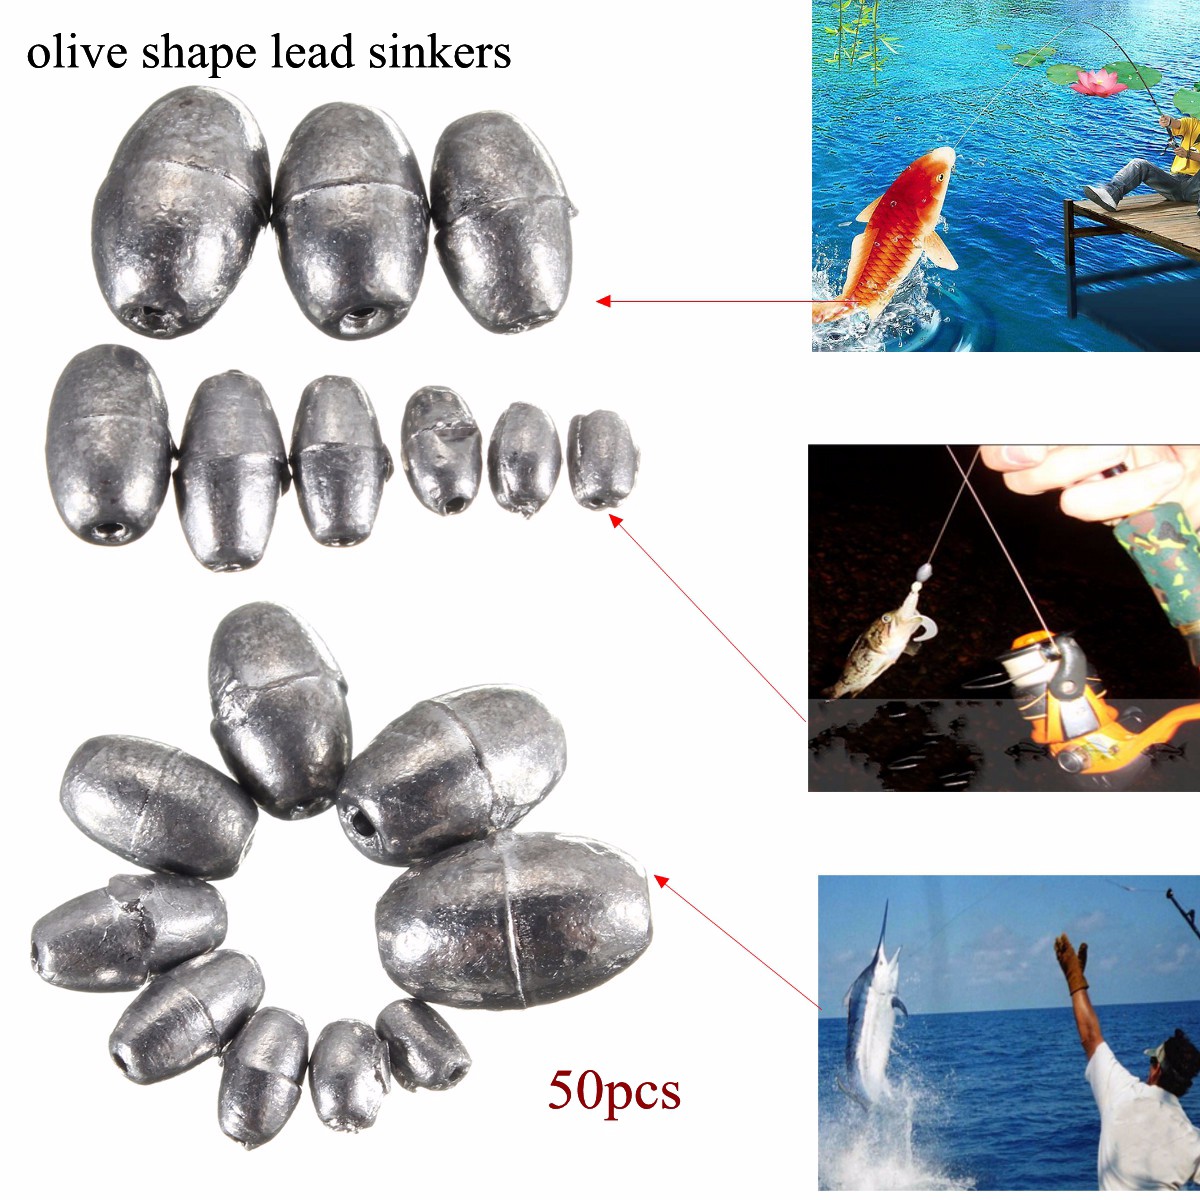 Details about   100pcs olive shape lead sinkers pure lead making fishing sinker P4 